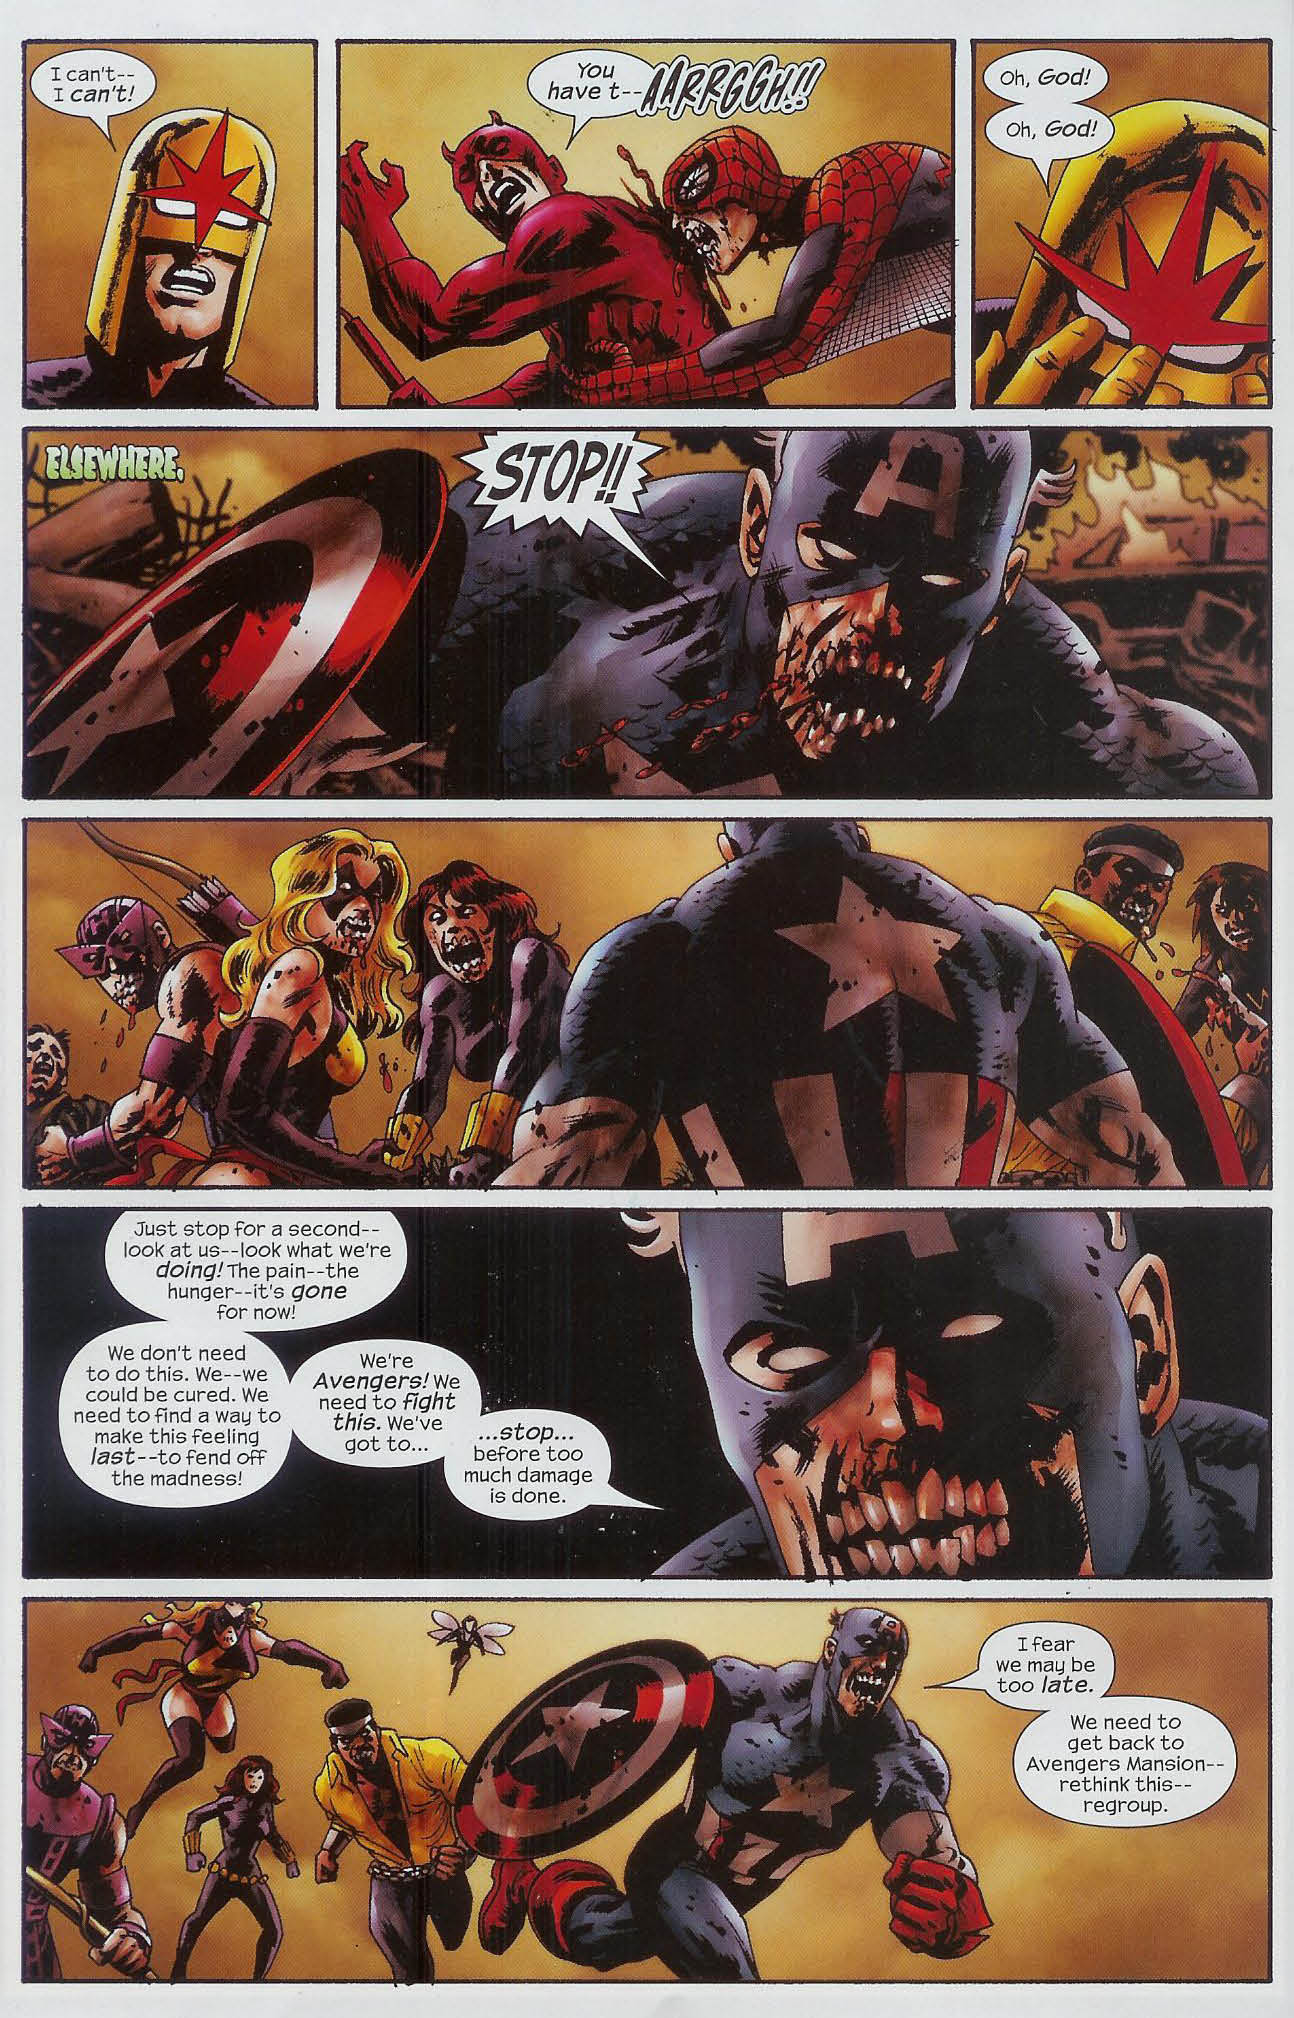 Marvel Zombies: Dead Days HD wallpapers, Desktop wallpaper - most viewed